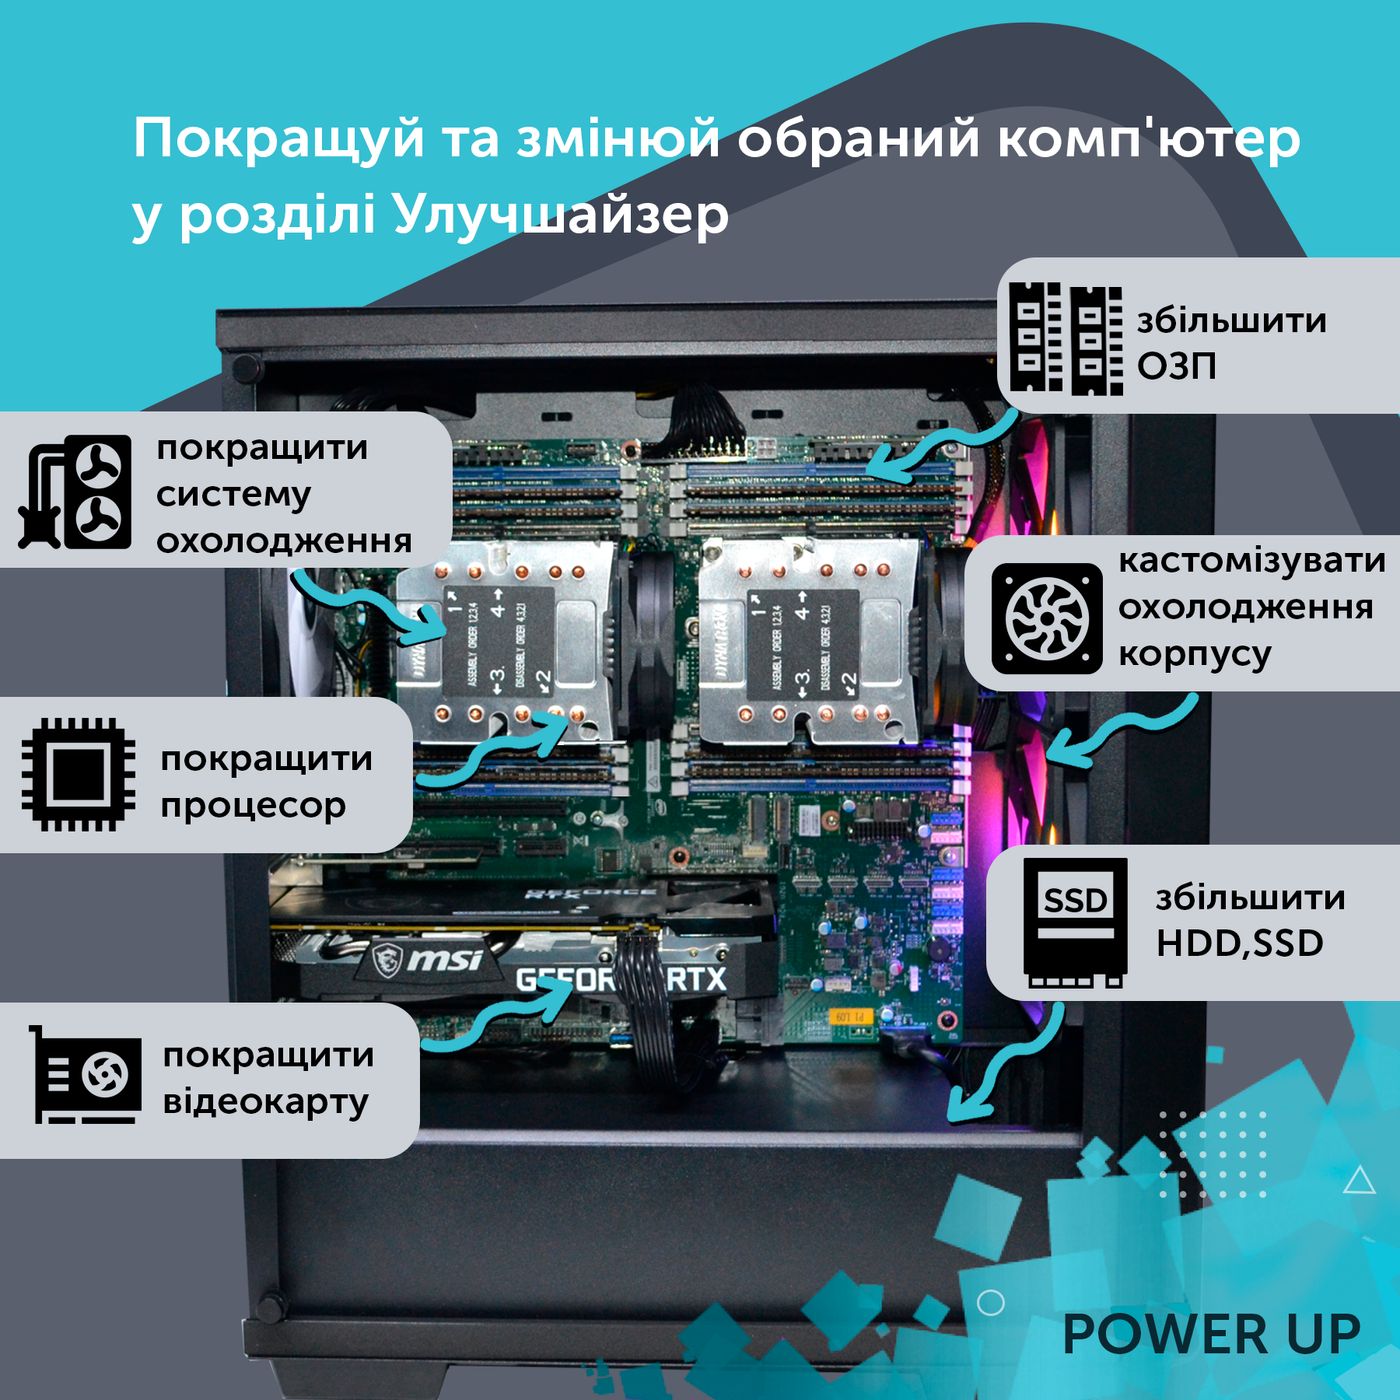 Рабочая станция PowerUp Desktop #199 Core i9 13900K/64 GB/SSD 1TB/GeForce RTX 4080 16GB